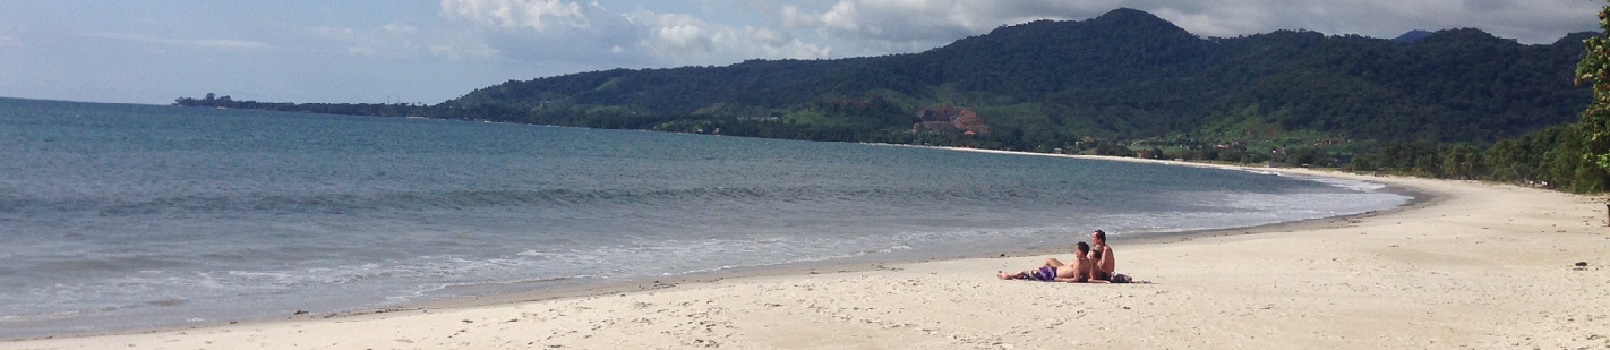 Beach in Sierra Leone